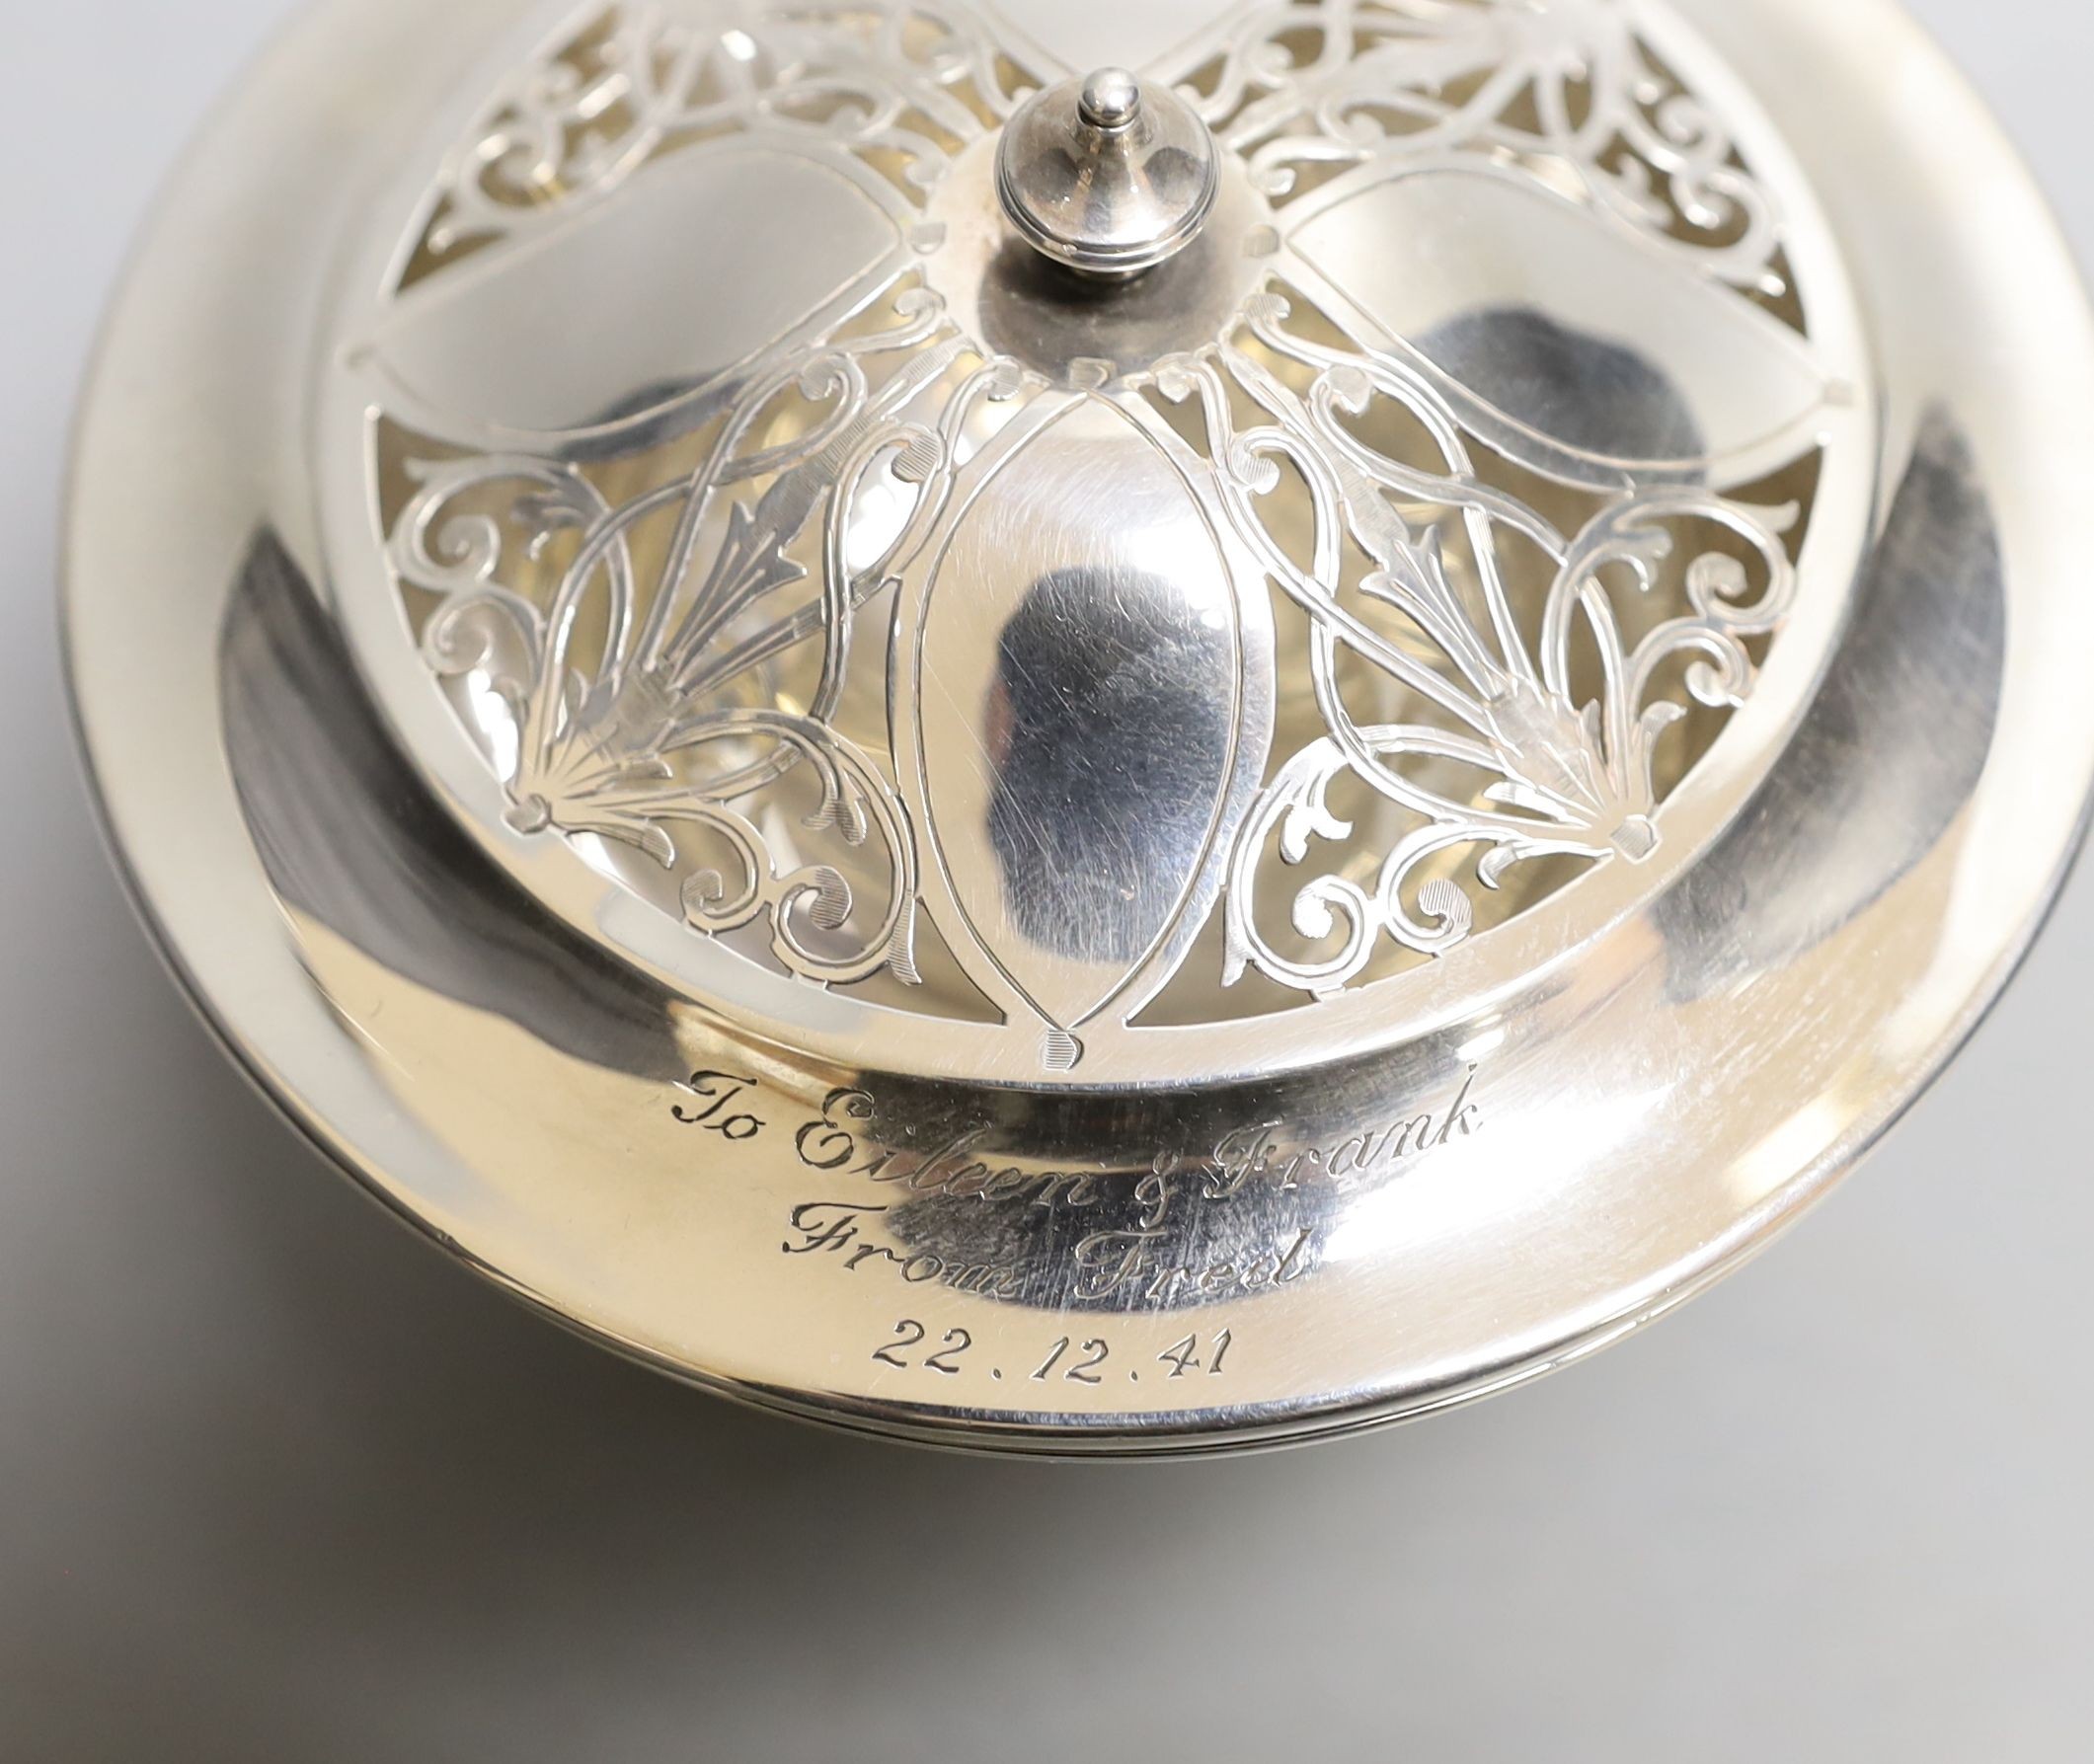 An Edwardian silver pot pourri bowl and cover, Goldsmiths & Silversmiths Co Ltd, with presentation inscription, London, 1906, diameter 11.6cm, 5oz.